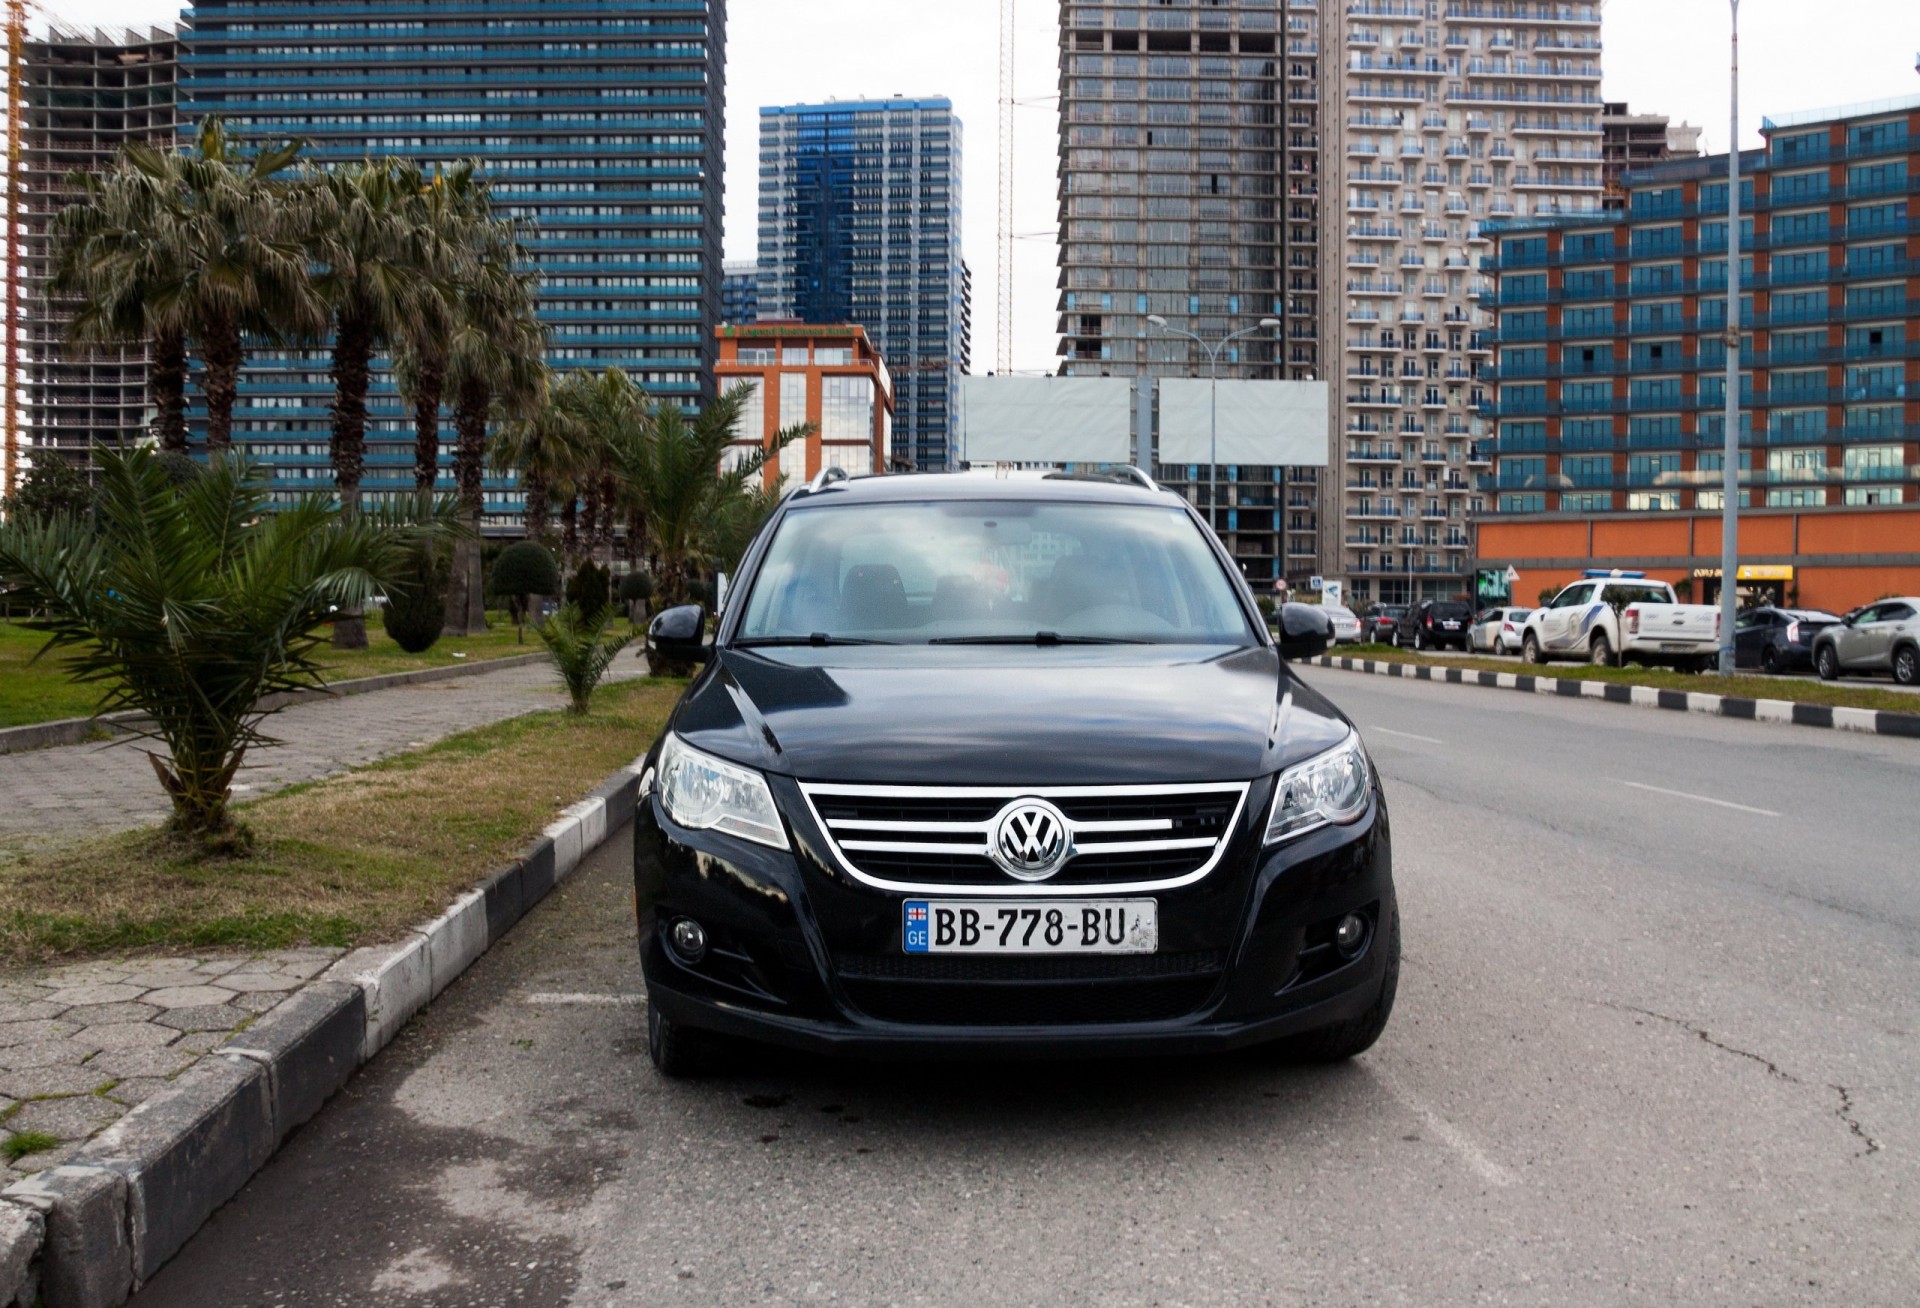 2011 Volkswagen Tiguan Suv on the streets of Batumi